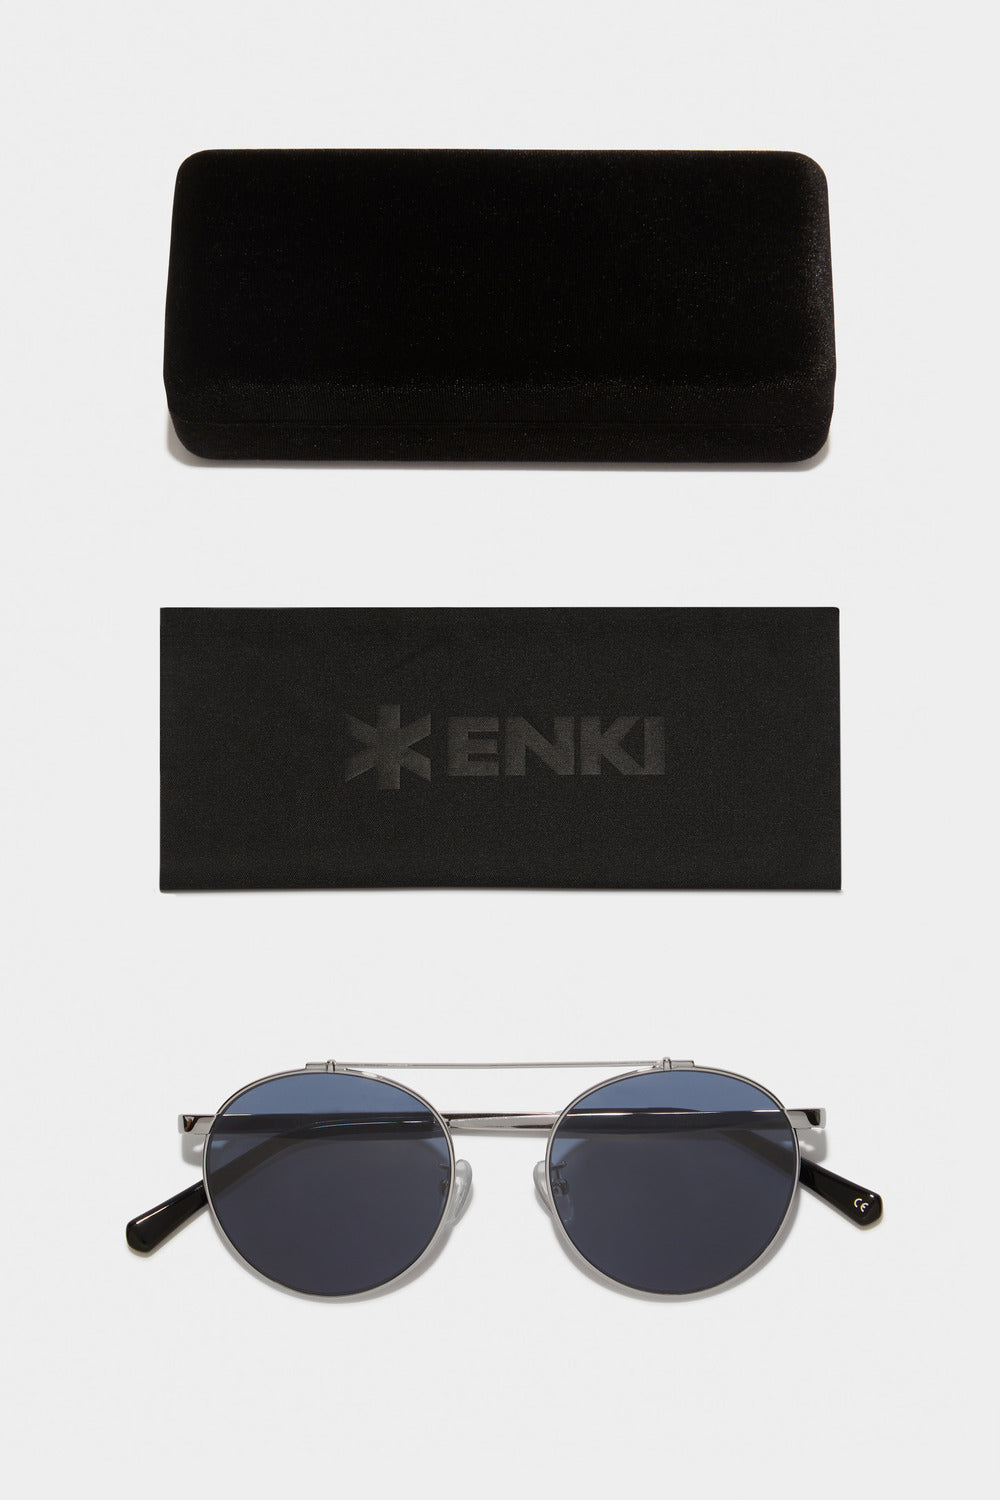 www.enkieyewear.com Crinis Men’s and Women’s Sunglasses